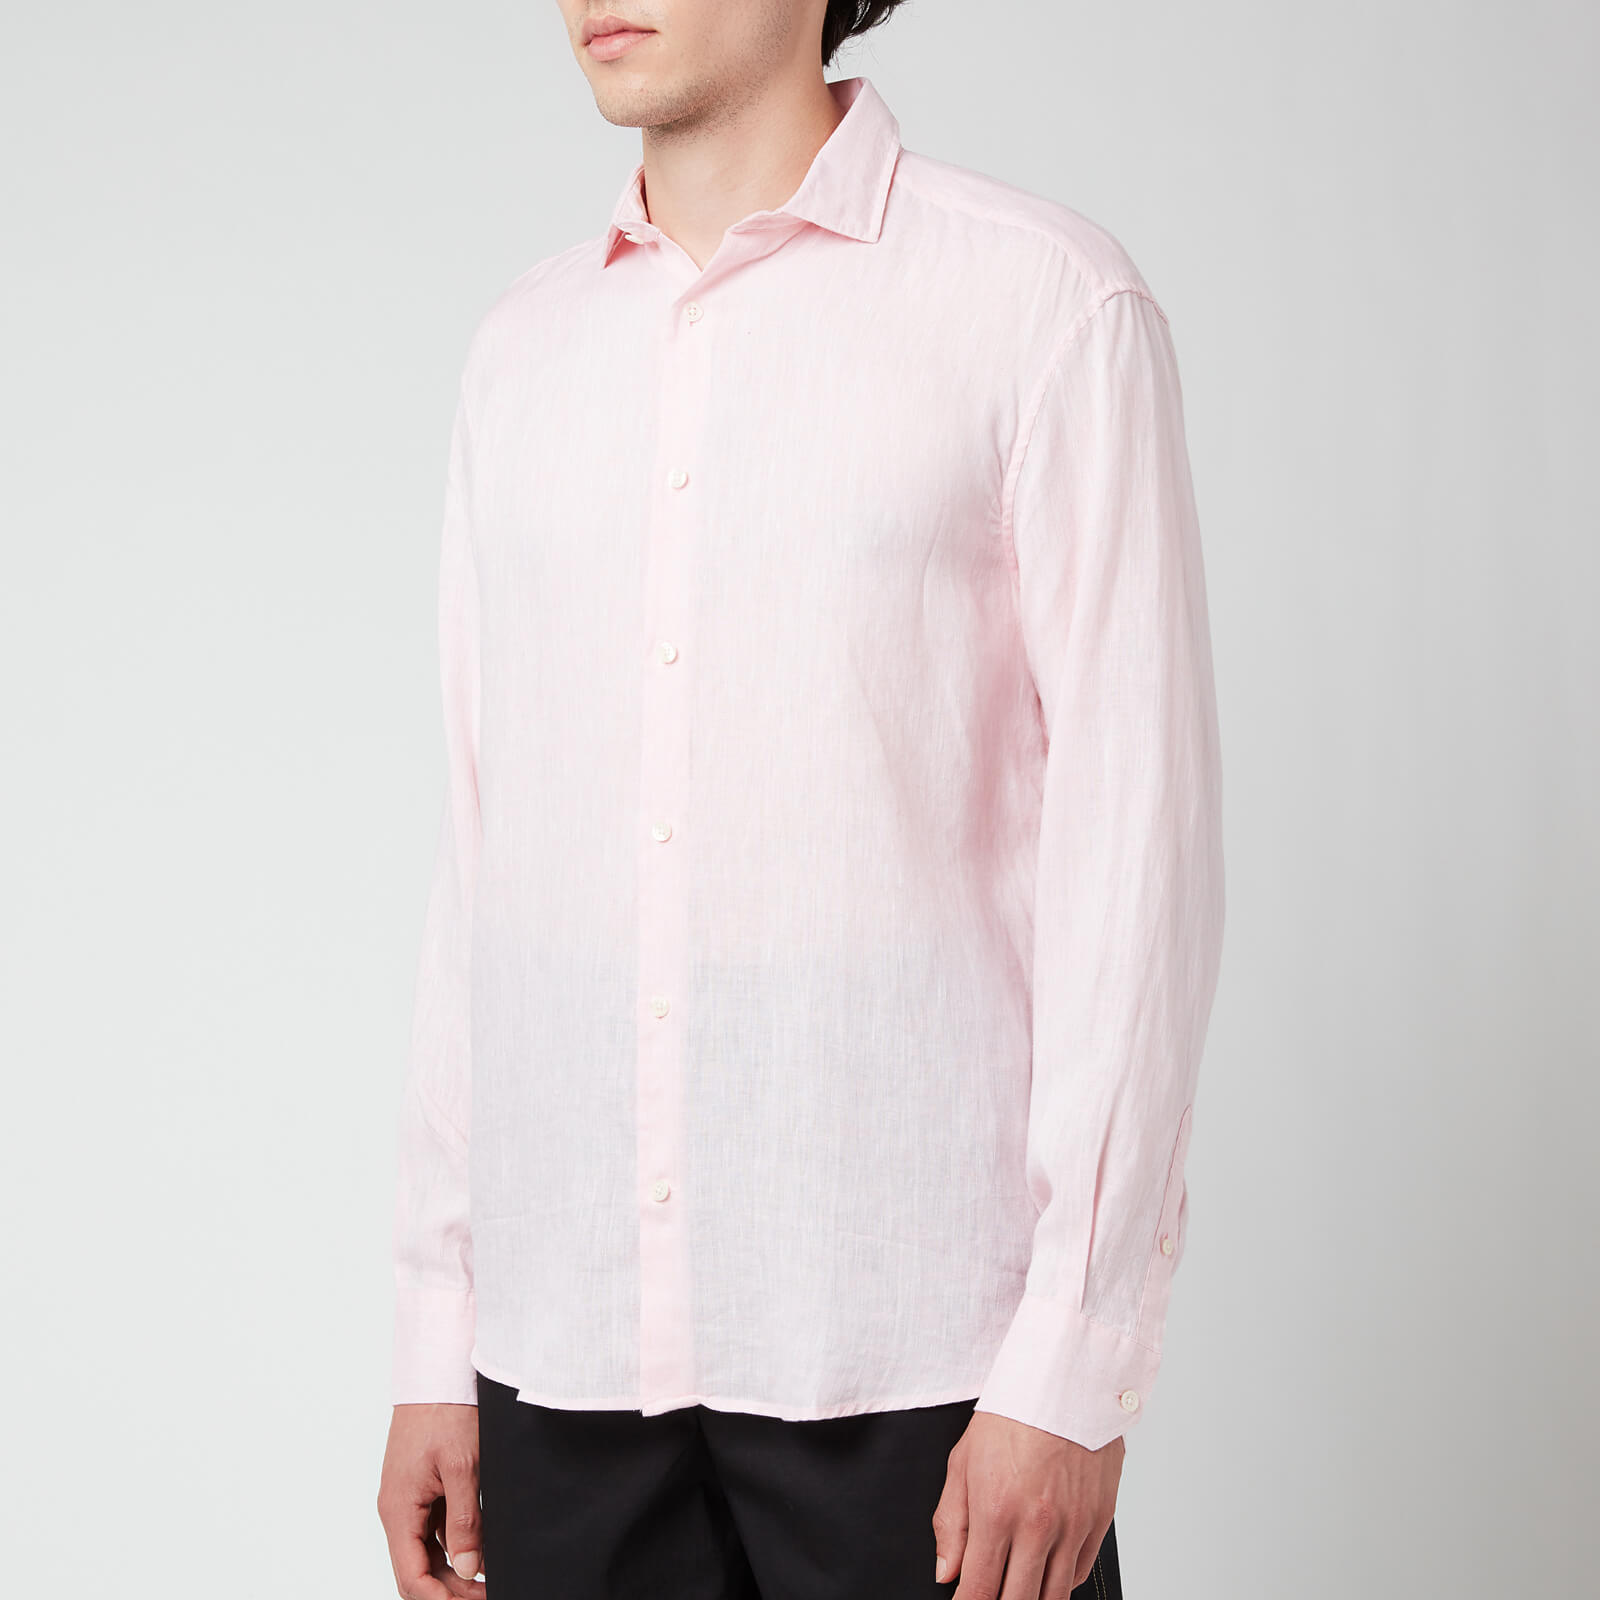 Frescobol Carioca Men's Antonio Linen Long Sleeve Shirt - Light Pink - L